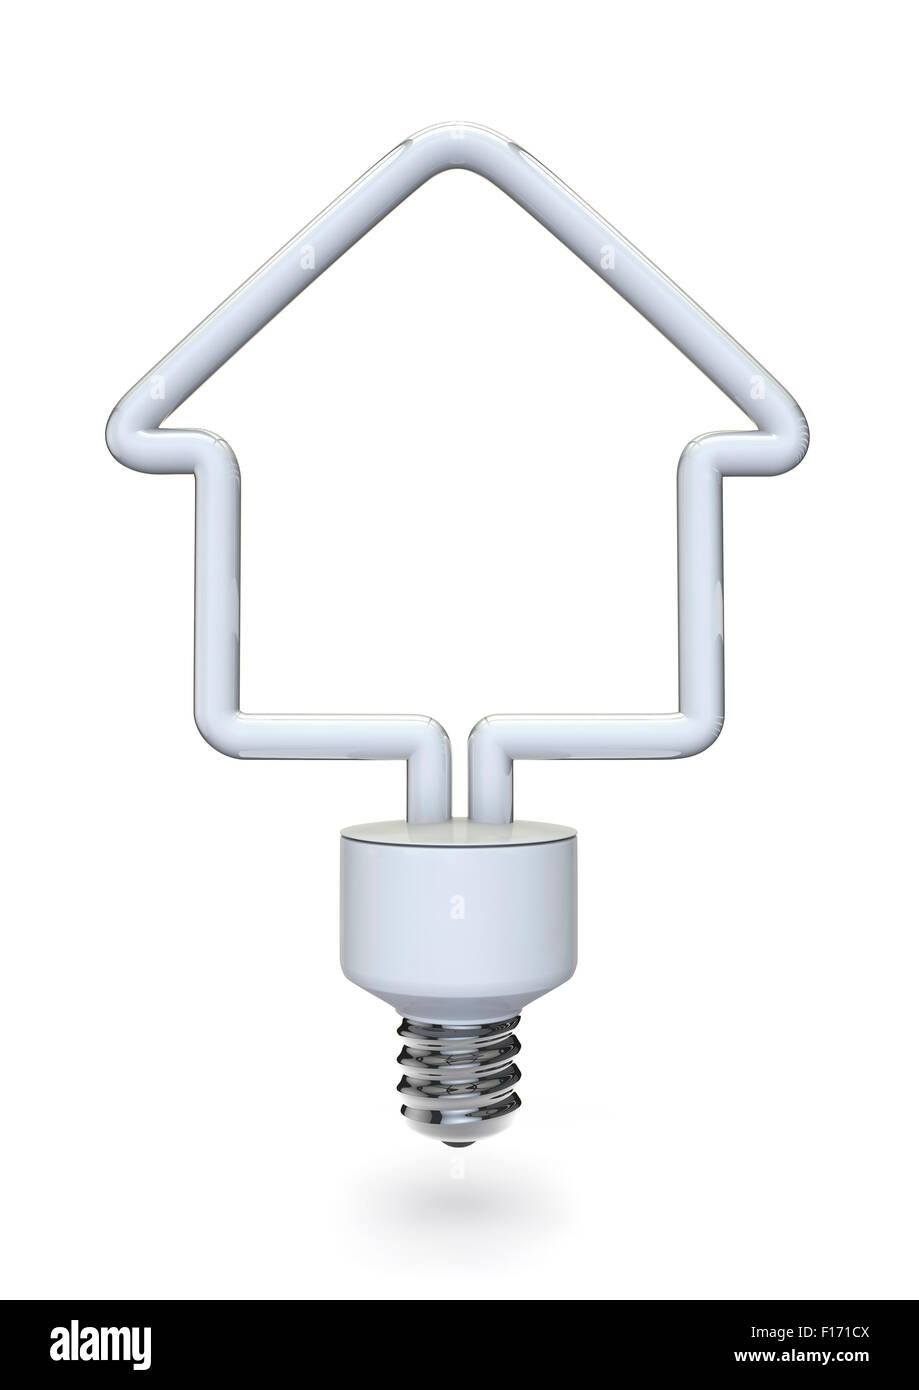 Energy bulb house / 3D render of house shaped energy bulb Stock Photo